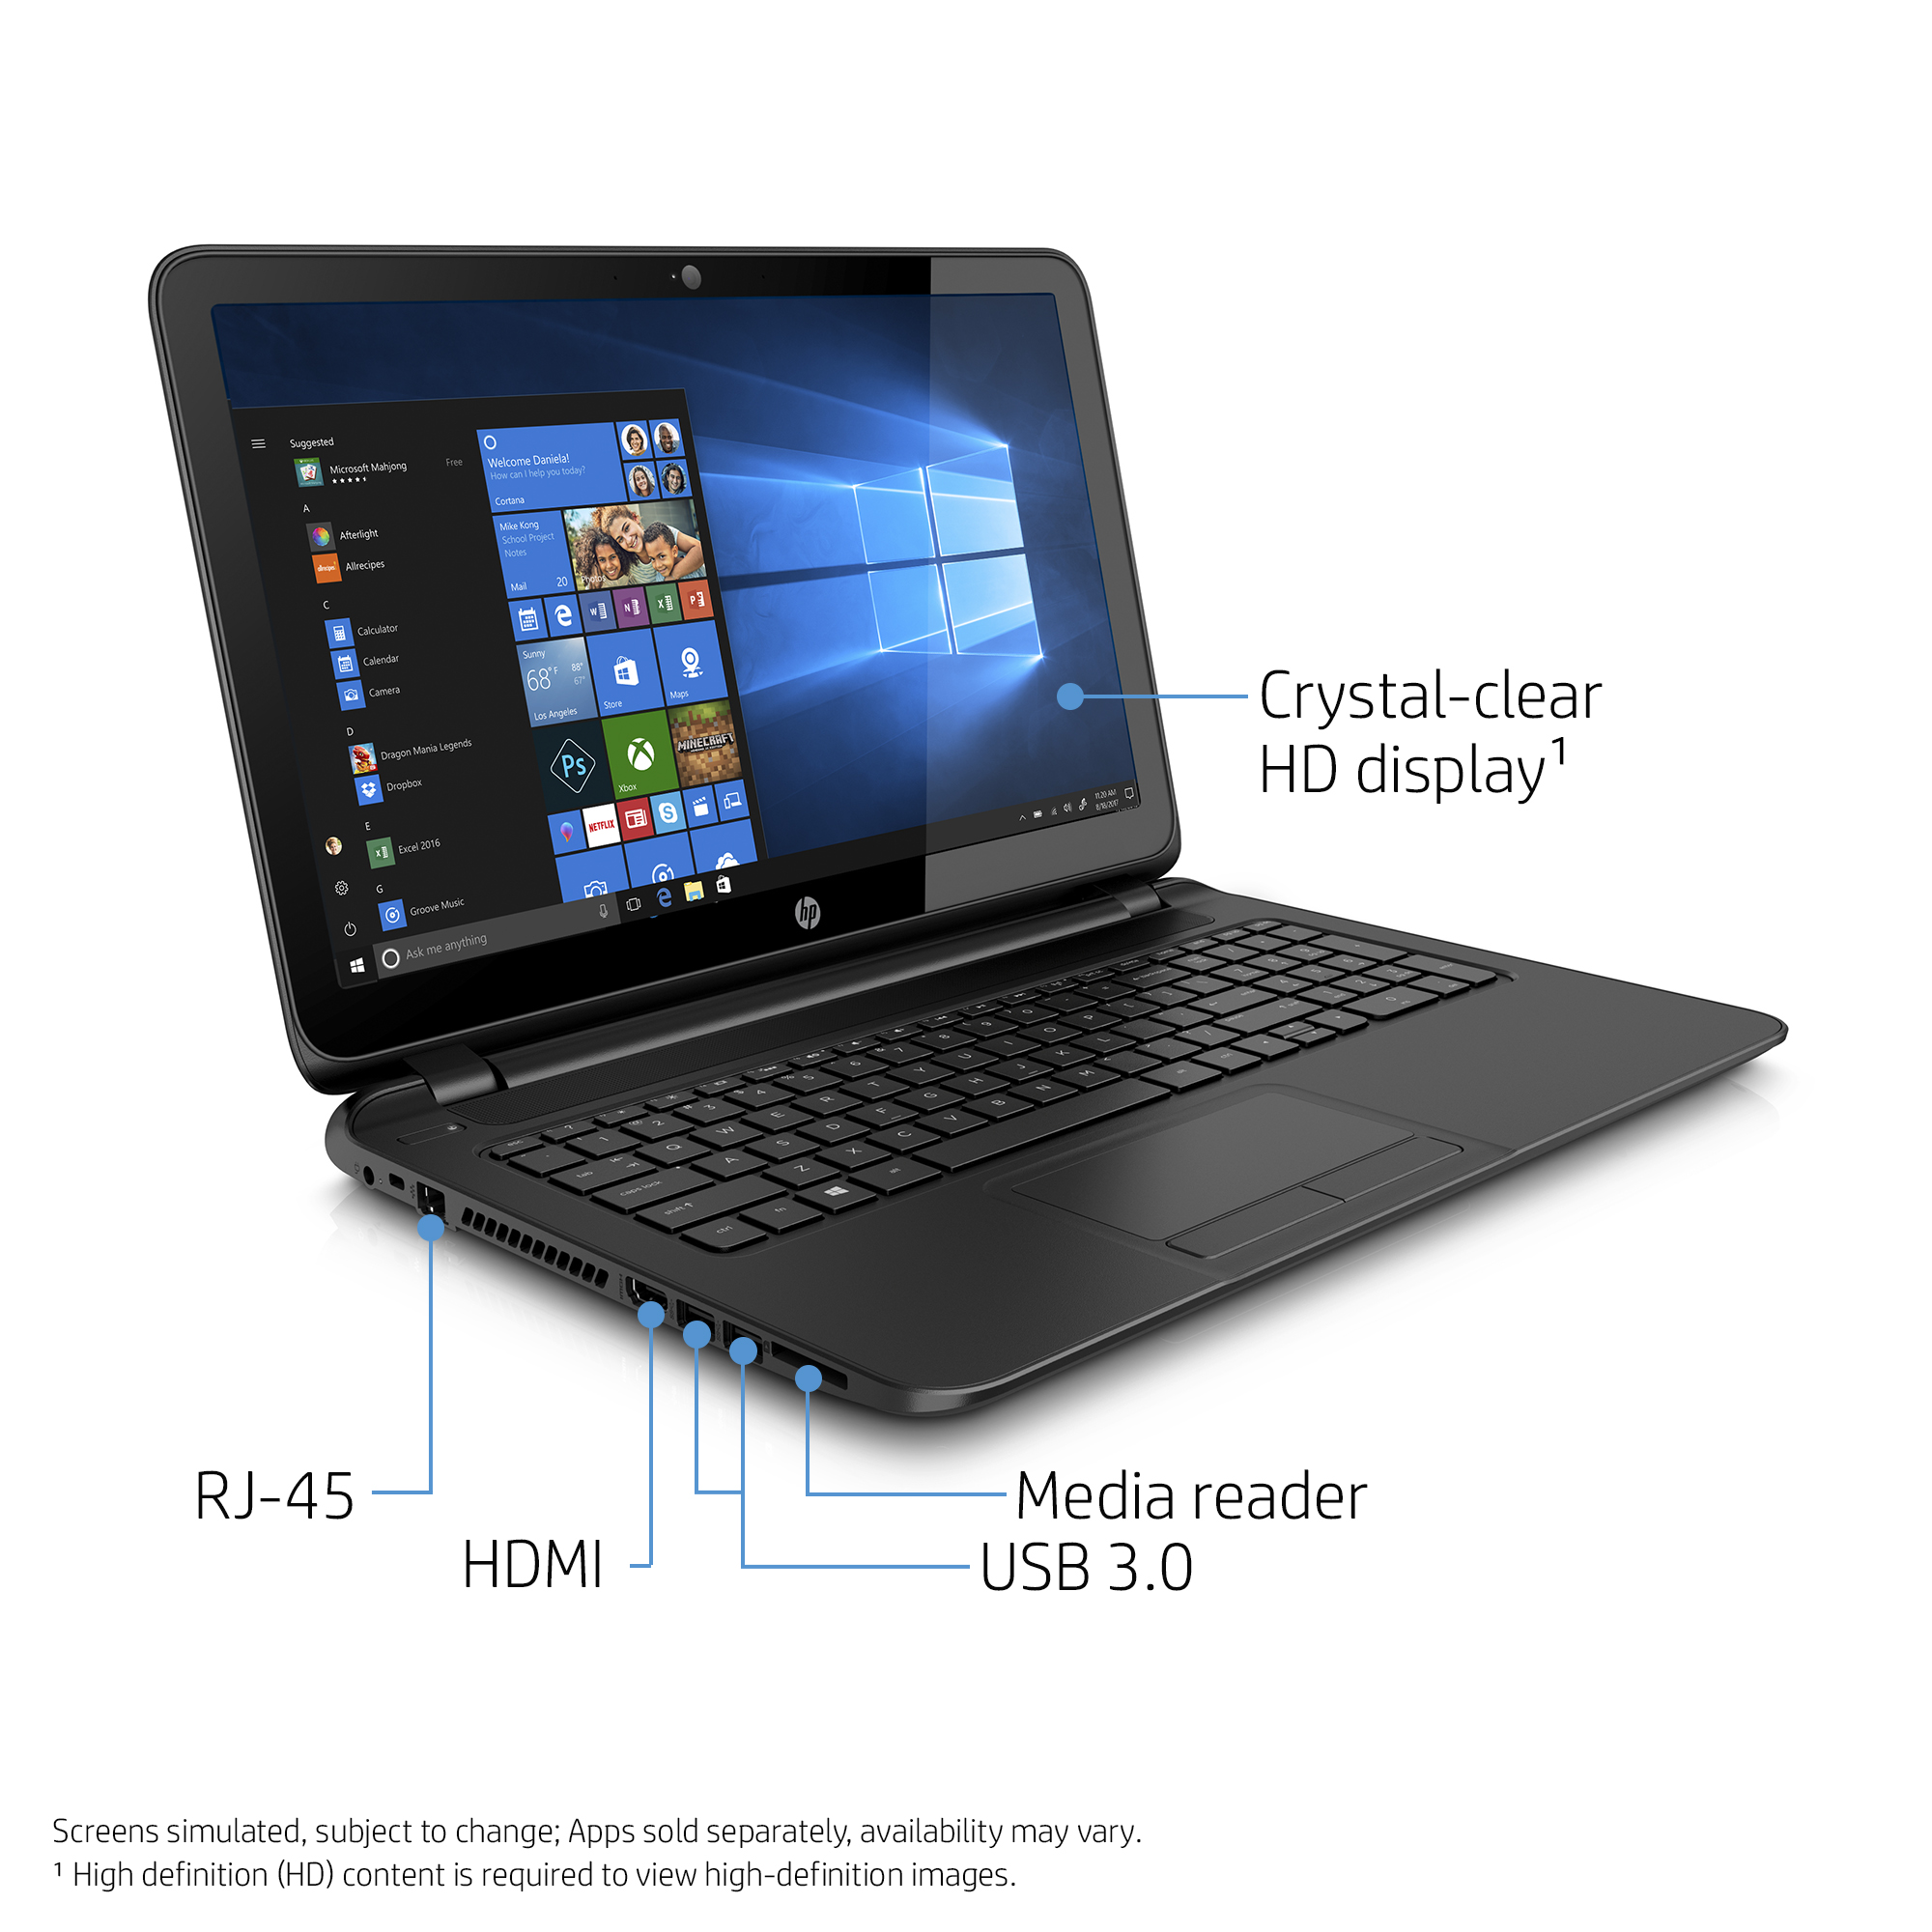 HP 15-f246wm 15.6" Laptop", Intel Celeron N2840, Intel HD Graphics, 500GB HDD, 4GB RAM, 15-F246WM Black - image 2 of 4